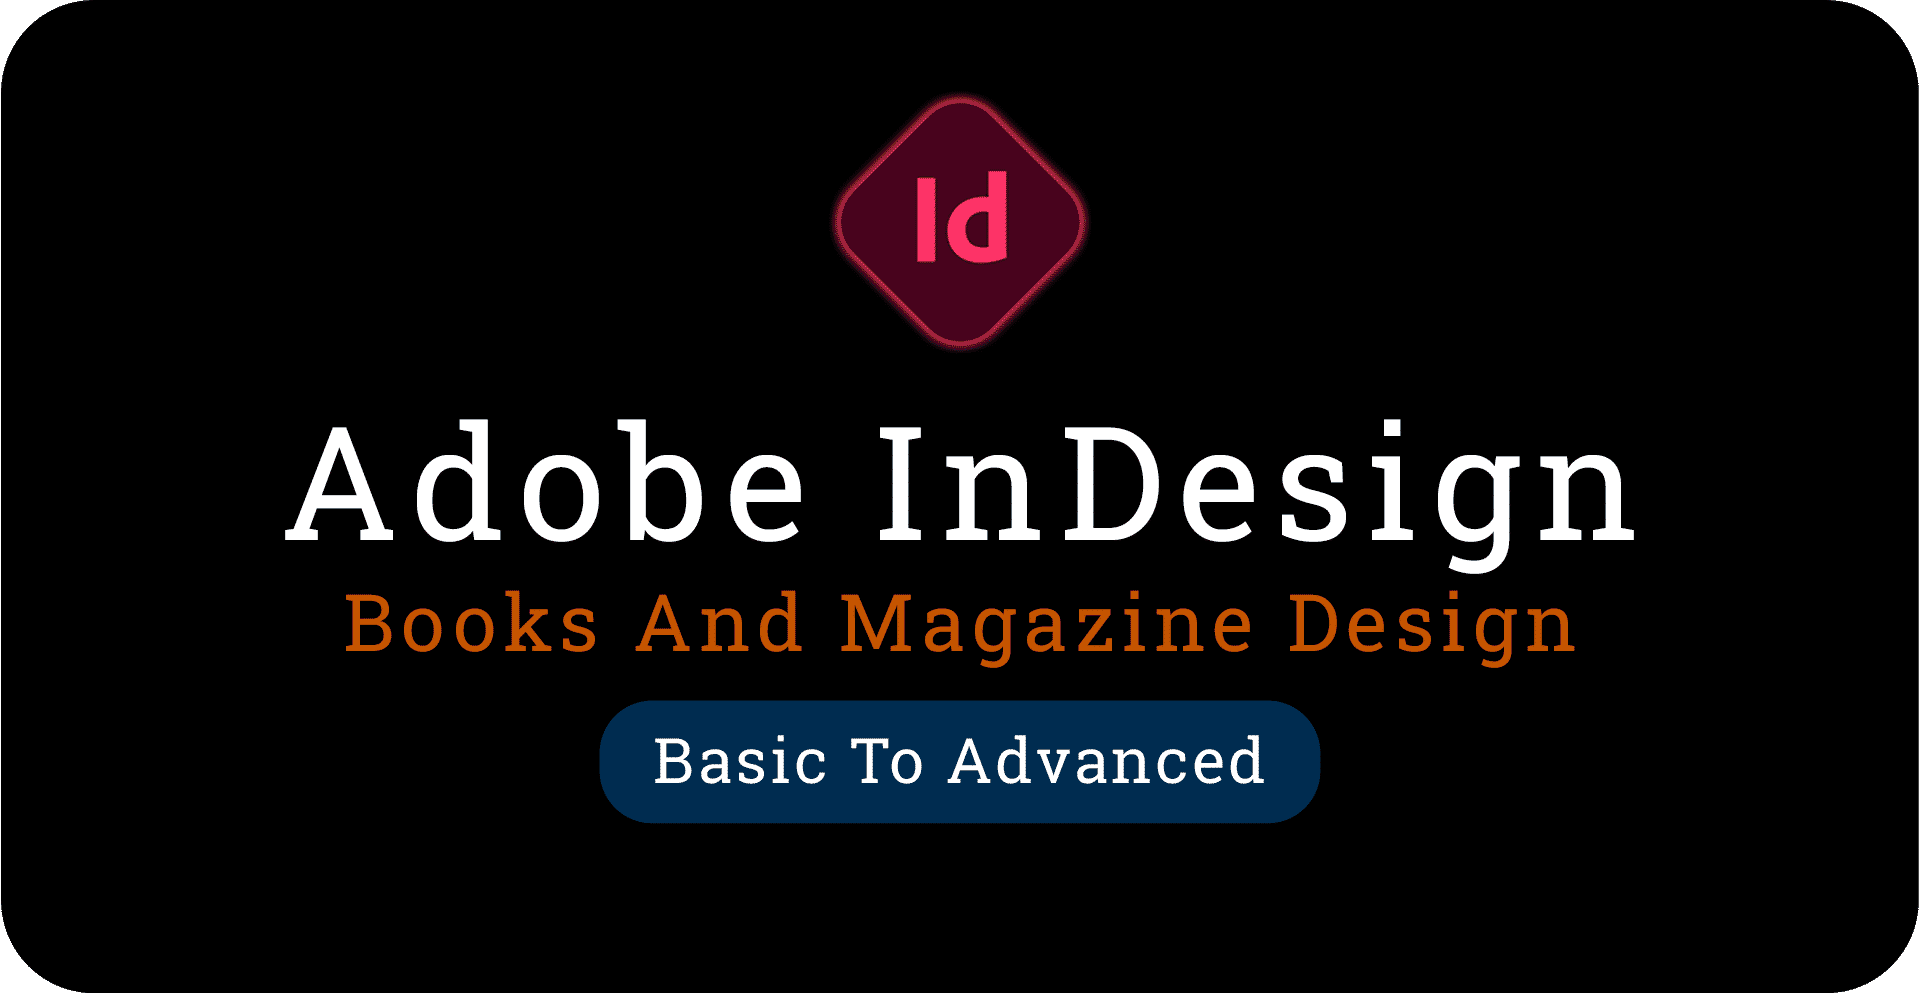 Adobe InDesign Essential Training – Design Magazine, Boucher